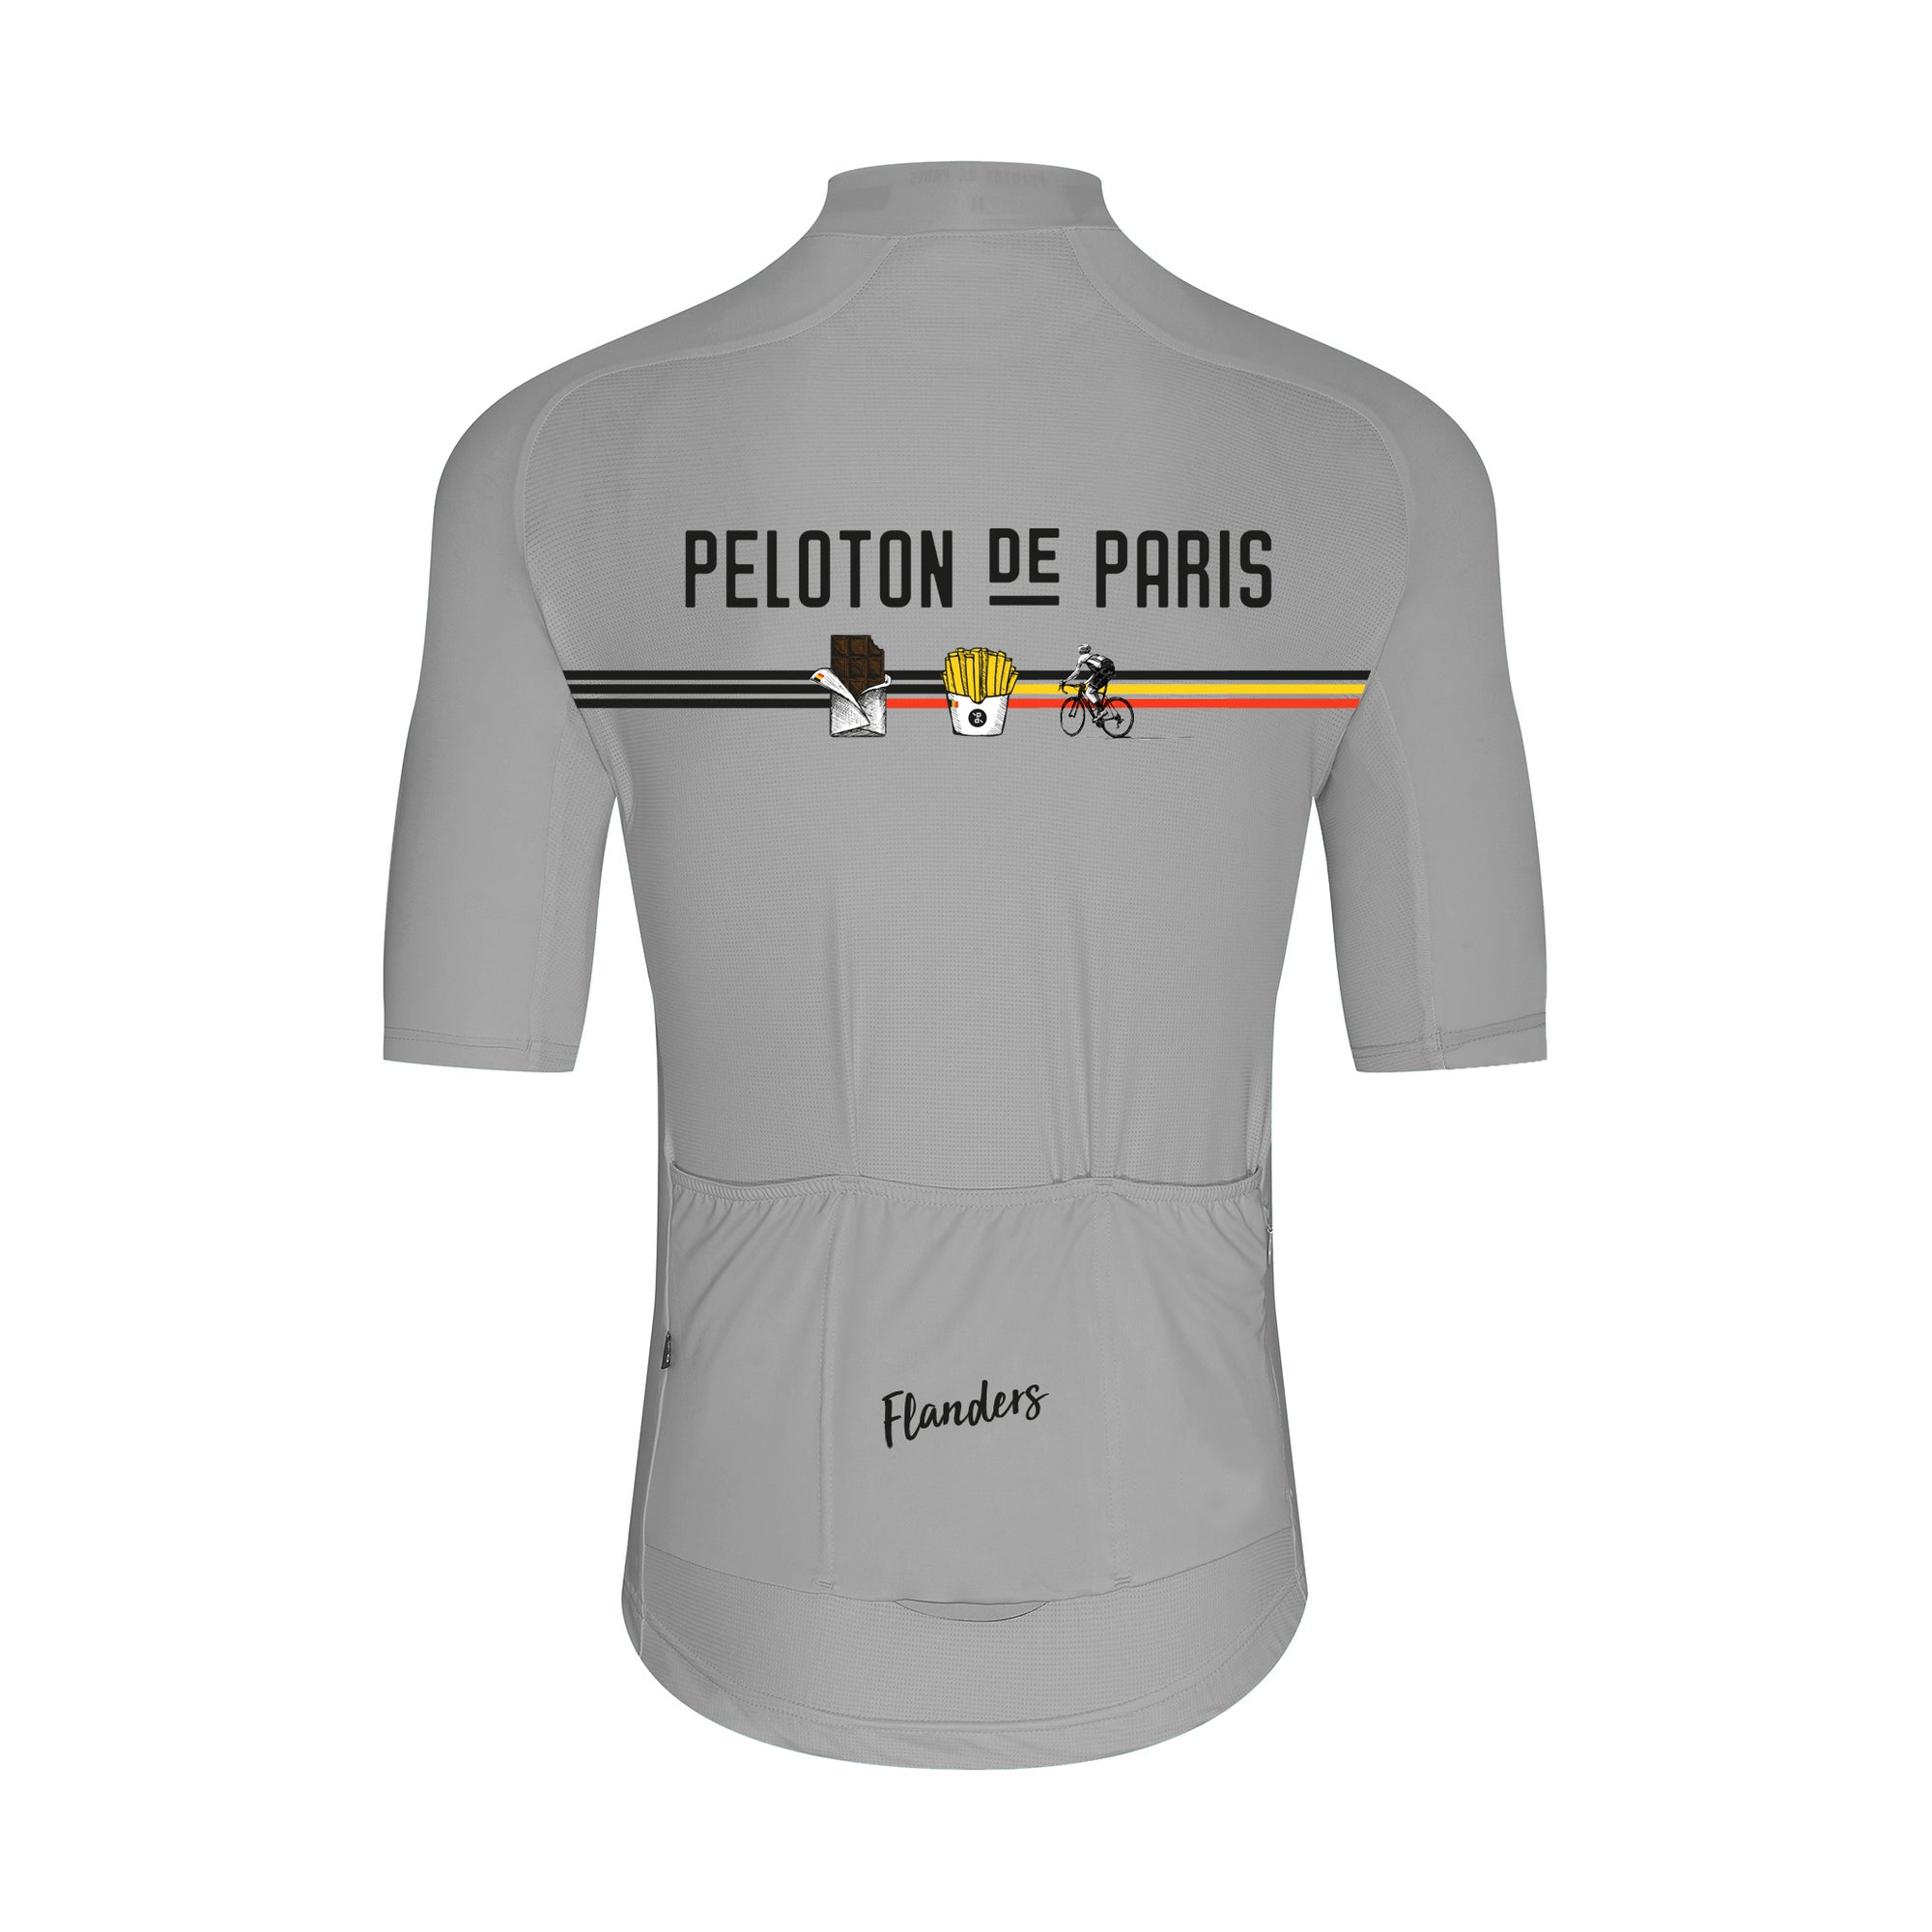 Peloton de Paris - Cycling Apparel & Casual Wear for Cyclists